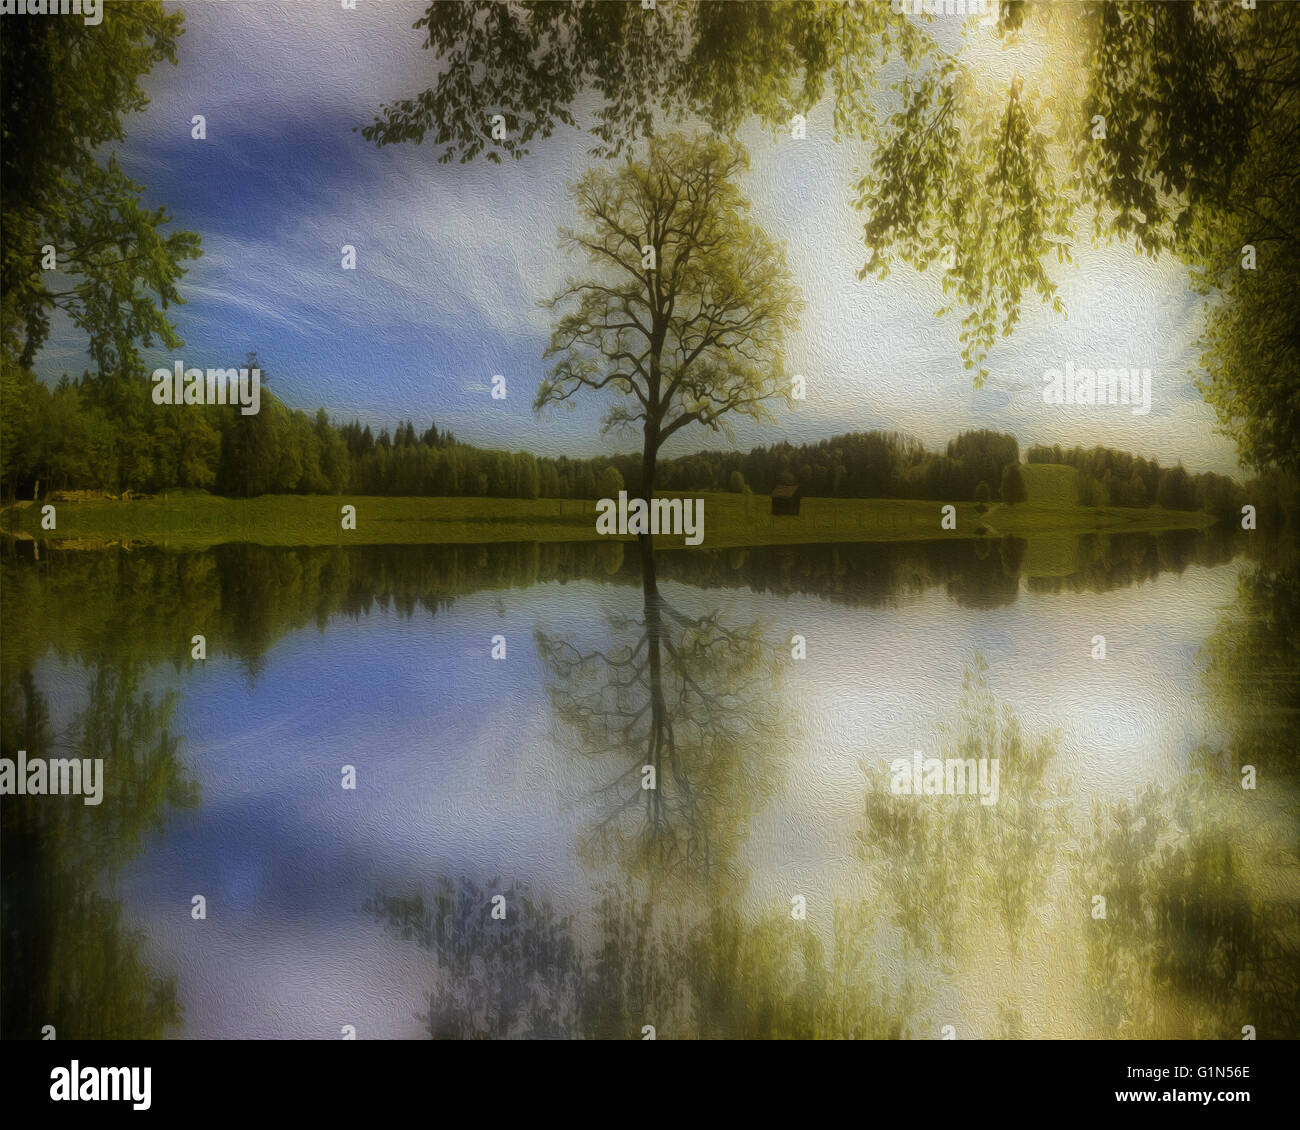 DIGITAL ART: Serenity Reflected Stock Photo